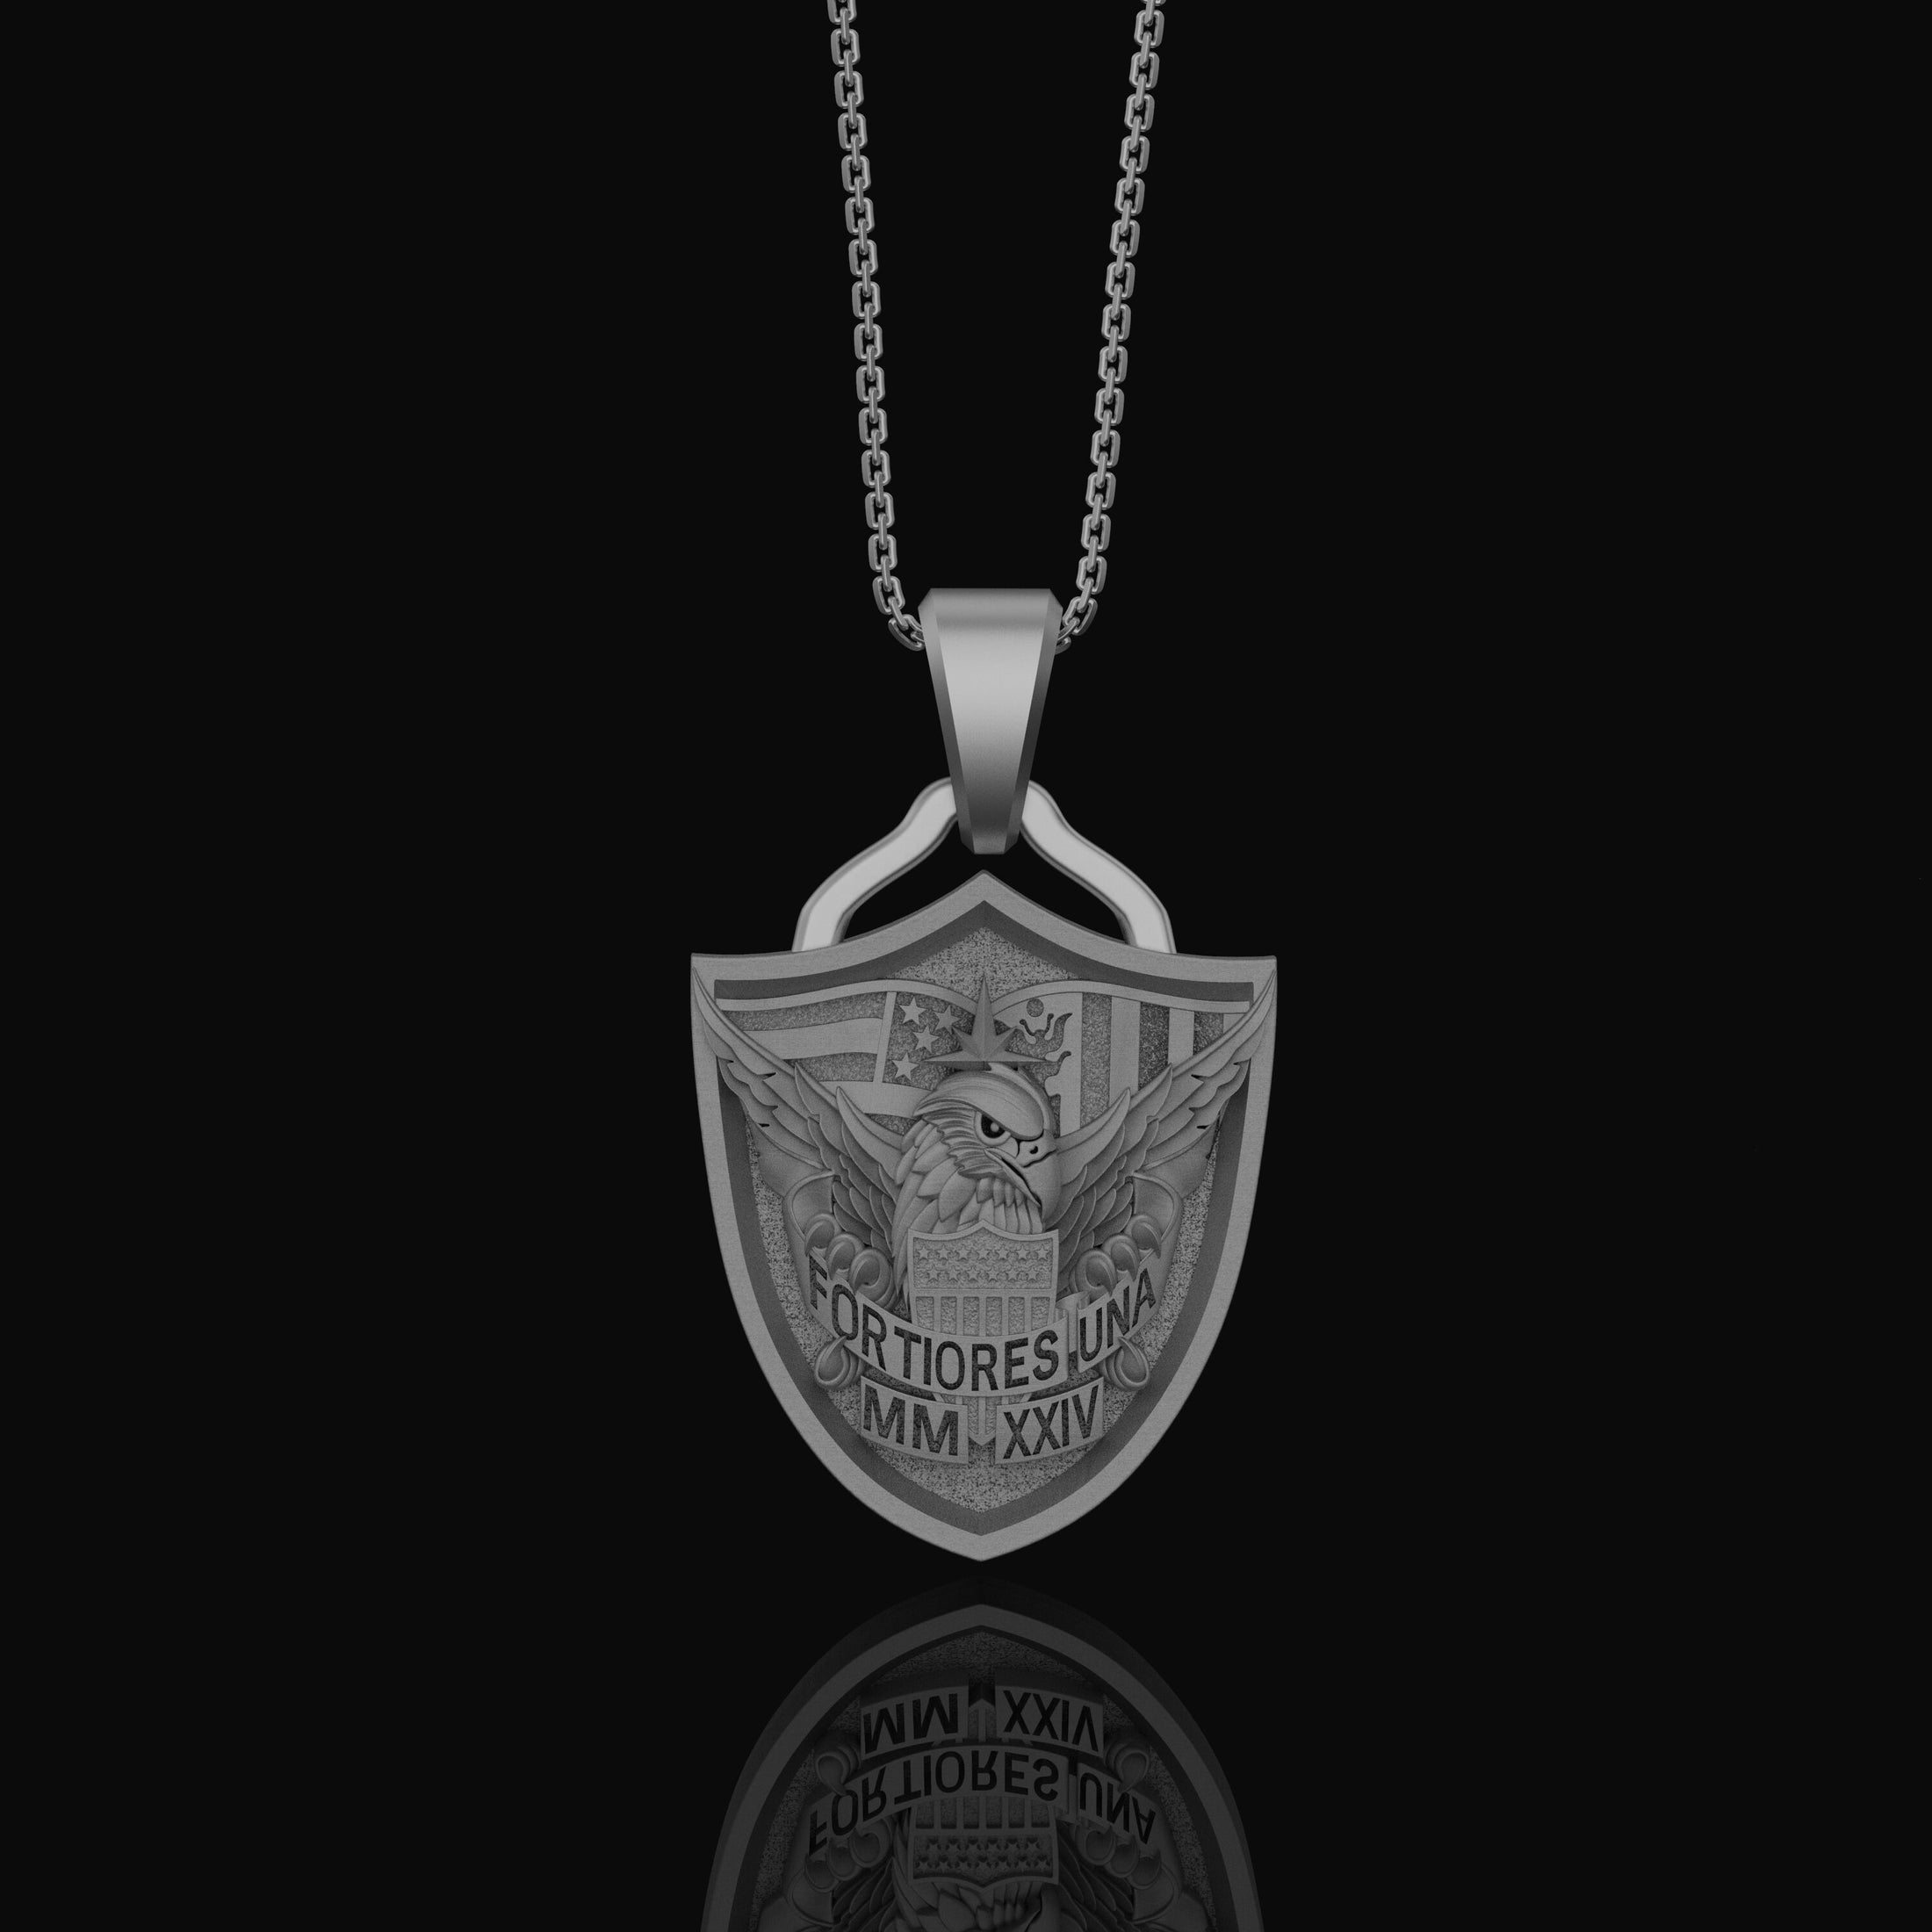 Fortiores Una American Eagle Medal Necklace - Patriotic Symbolic Silver Pendant, Unity Strength Jewelry